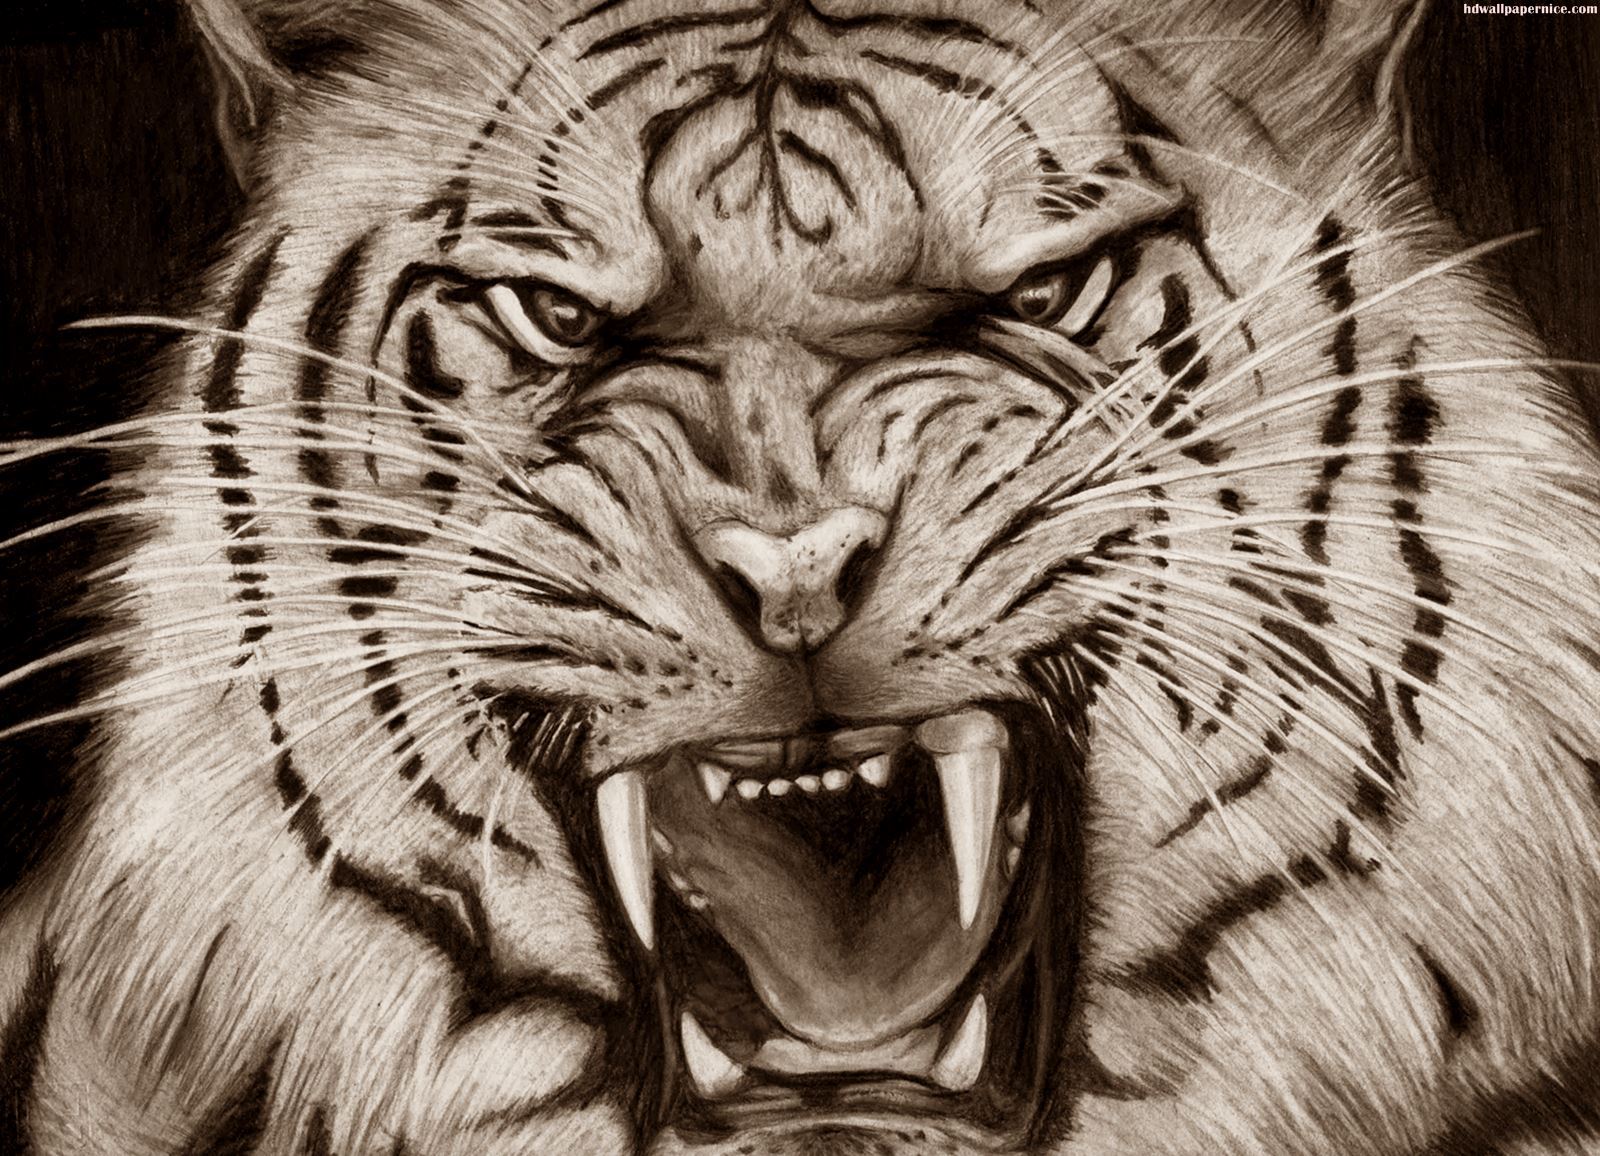 Tiger Scary Face Pencil Art HD Wallpaper Art Image HD